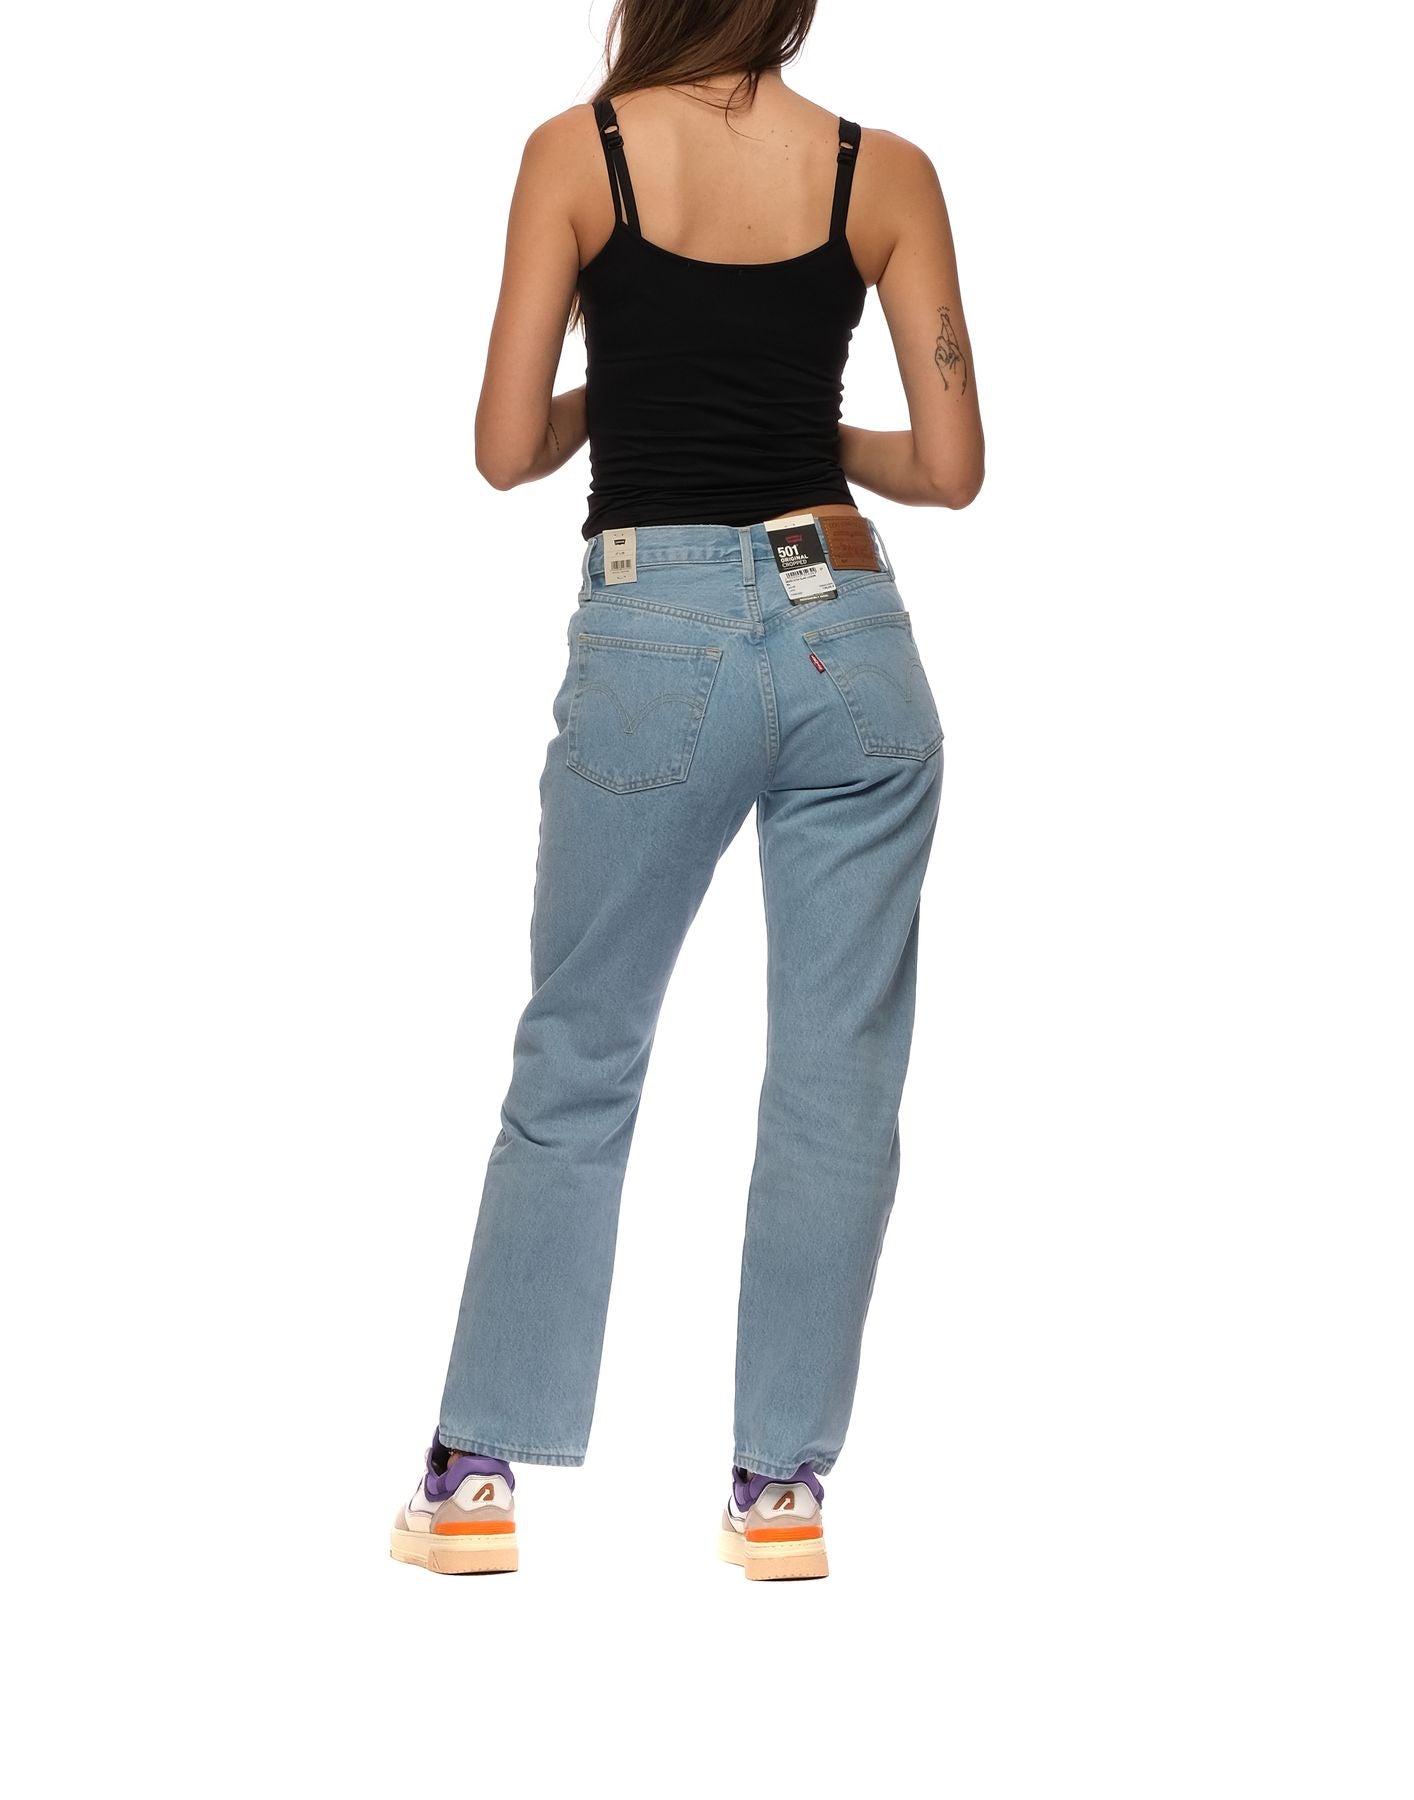 Jeans Woman 36200 0124 Ojai Luxor Levi's